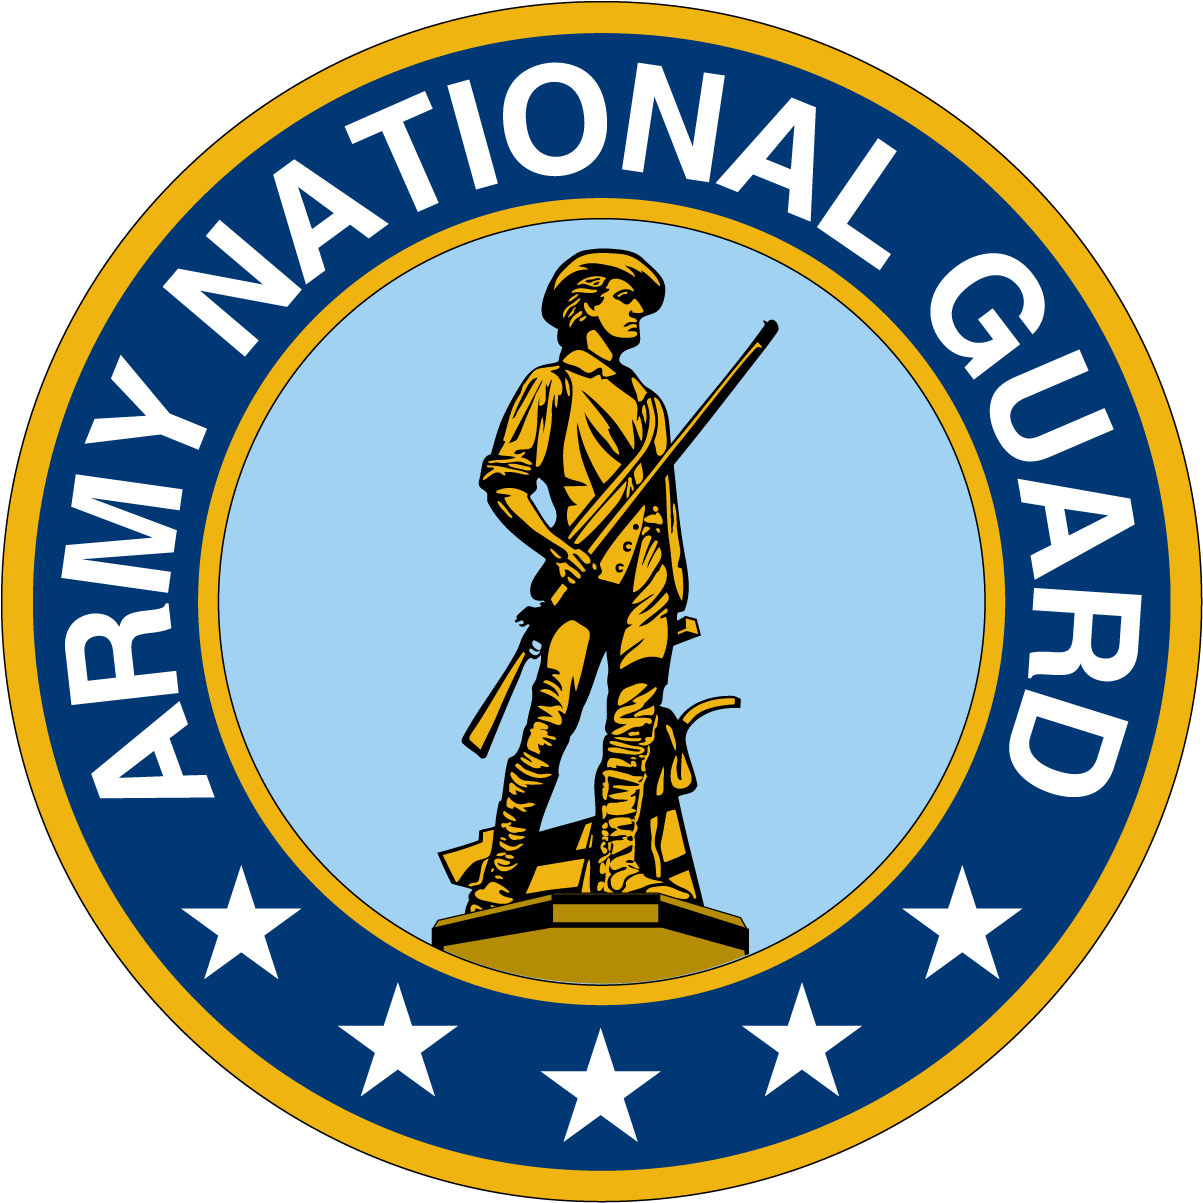 Army National Guard logo